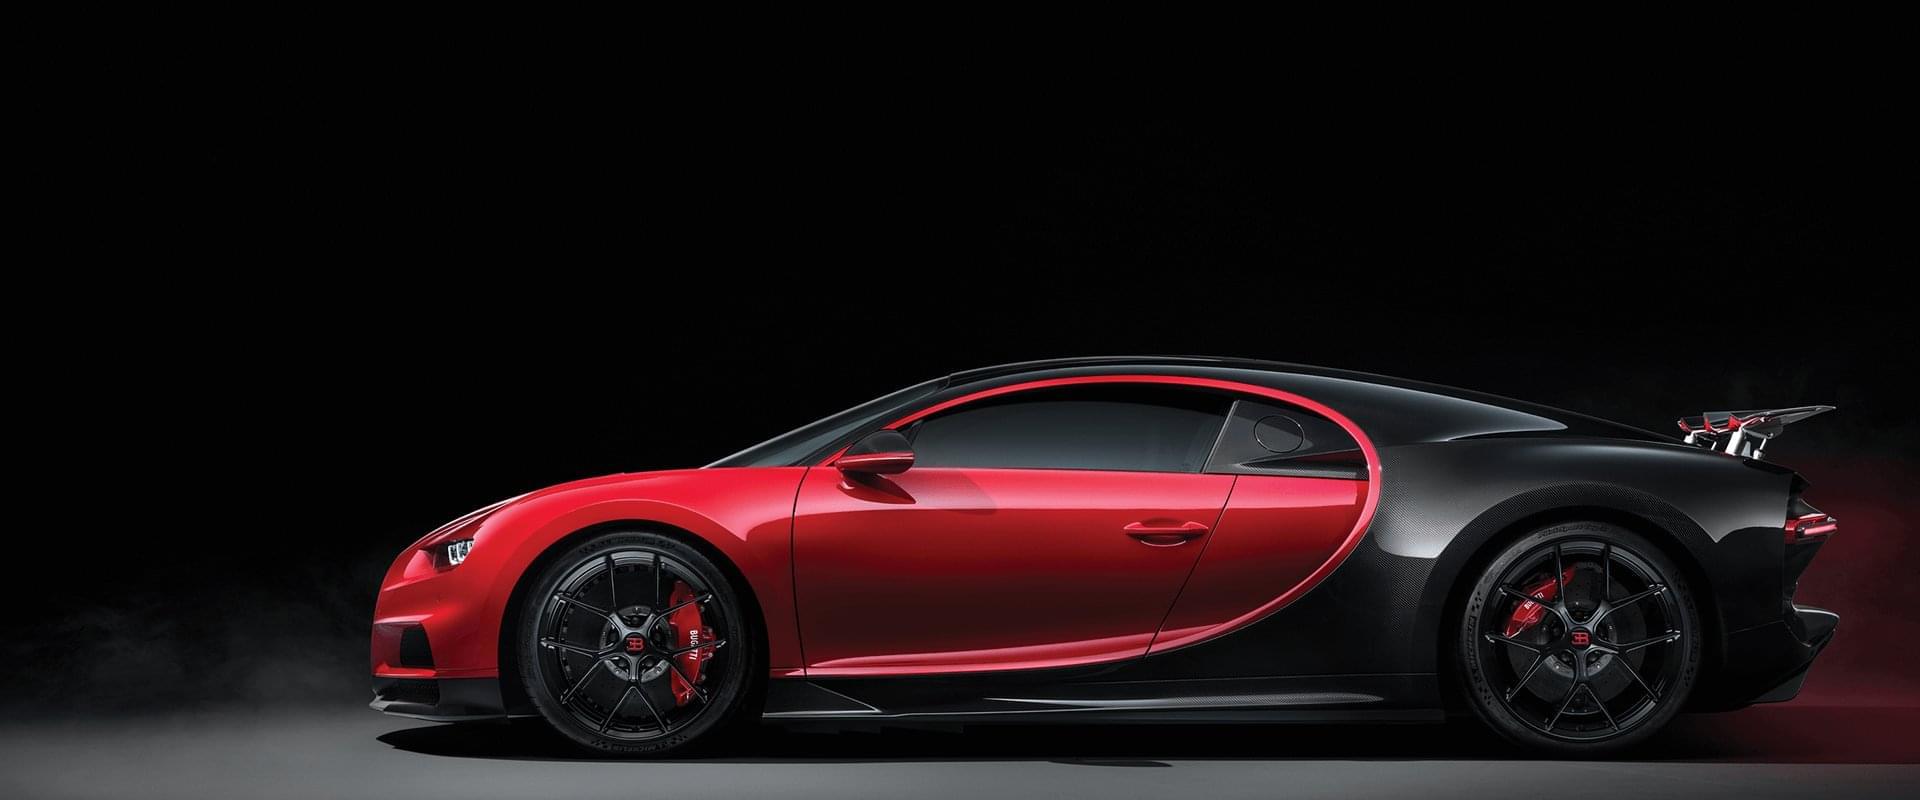 Bugatti5.jpg